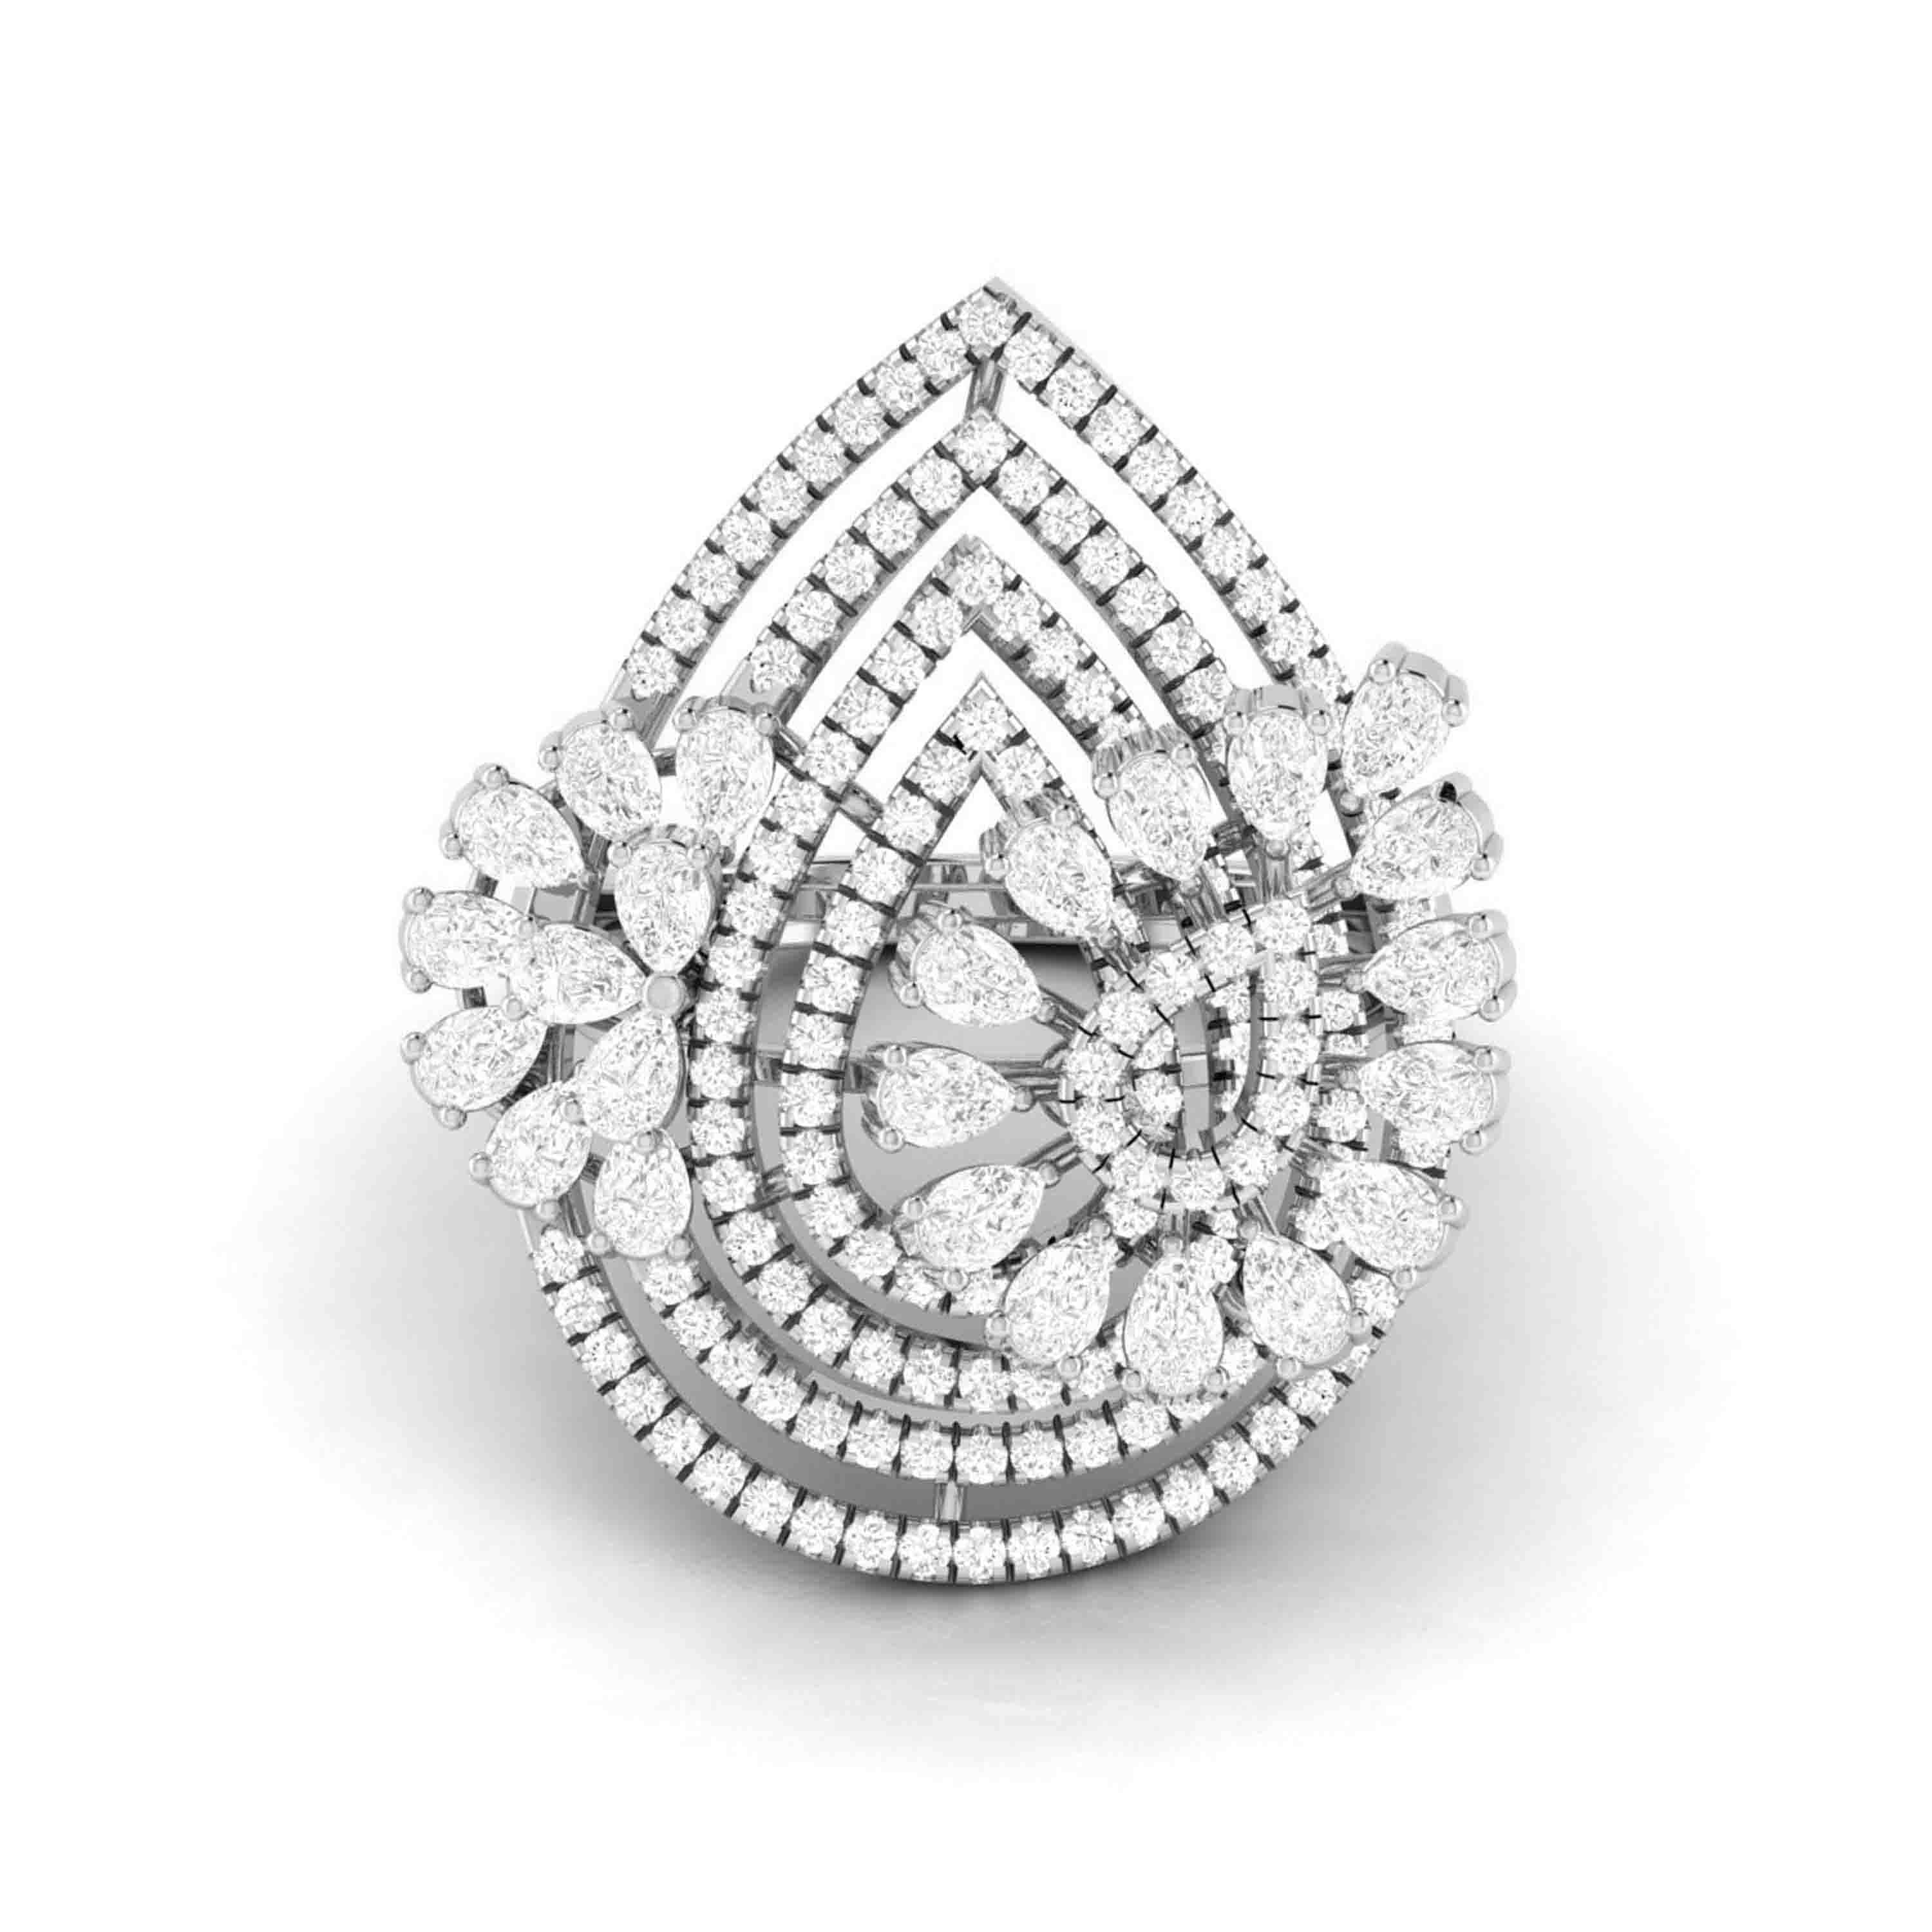 Unique Designer Solid White Gold 29-Diamond Cocktail Ring - $20K Appra